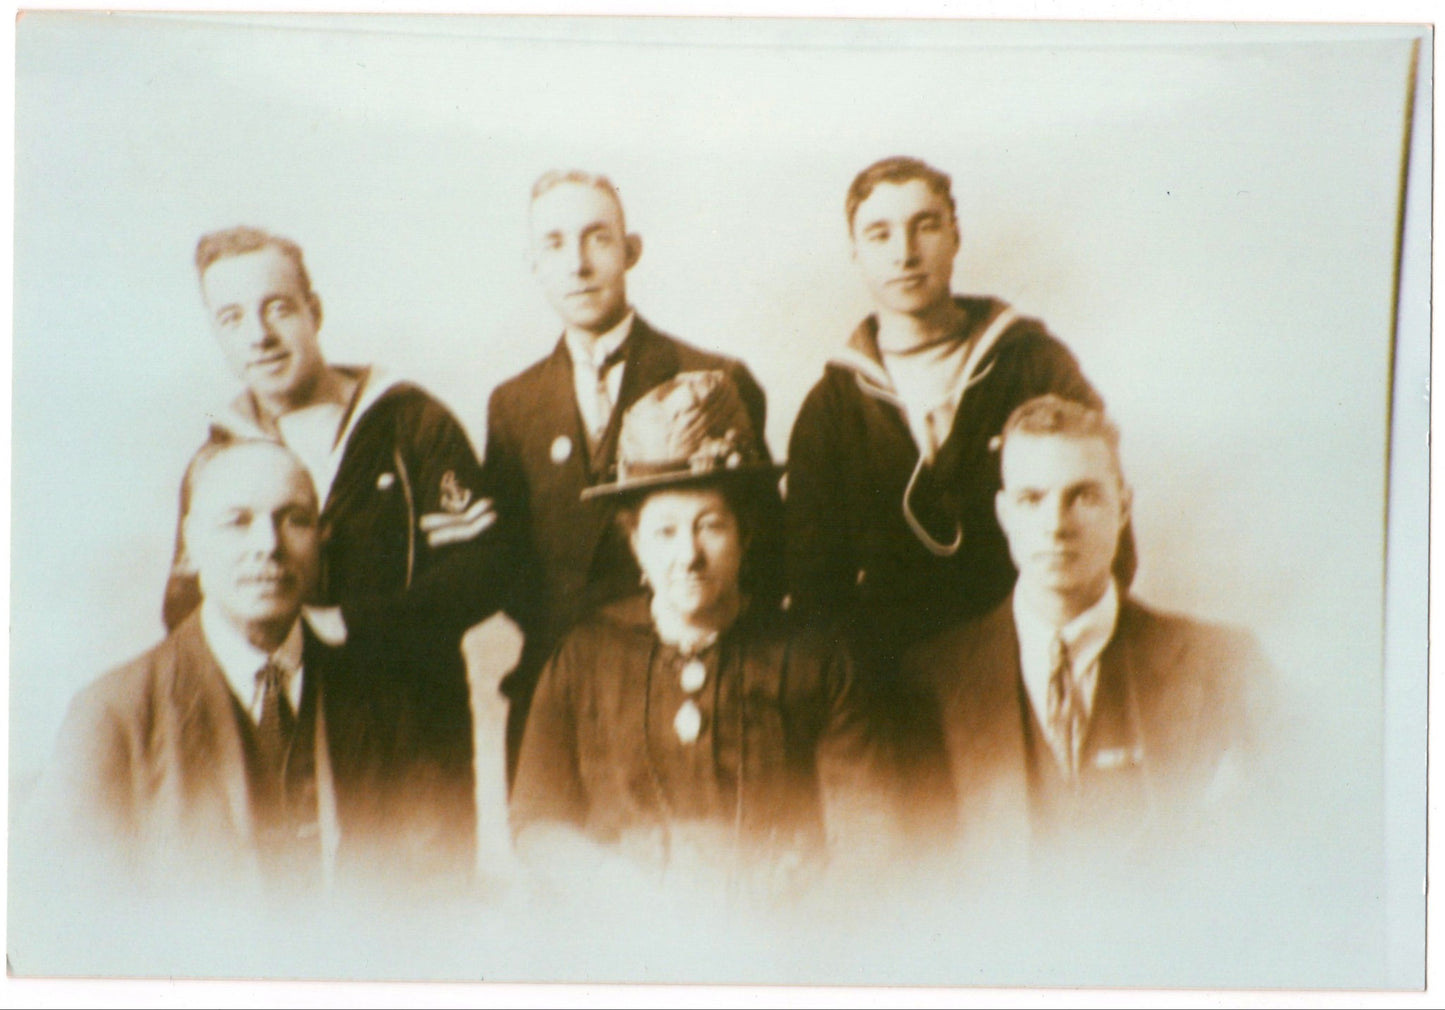 Old Postcard - Portrait of Sailor Family - Family Photo - British Seamen - UK